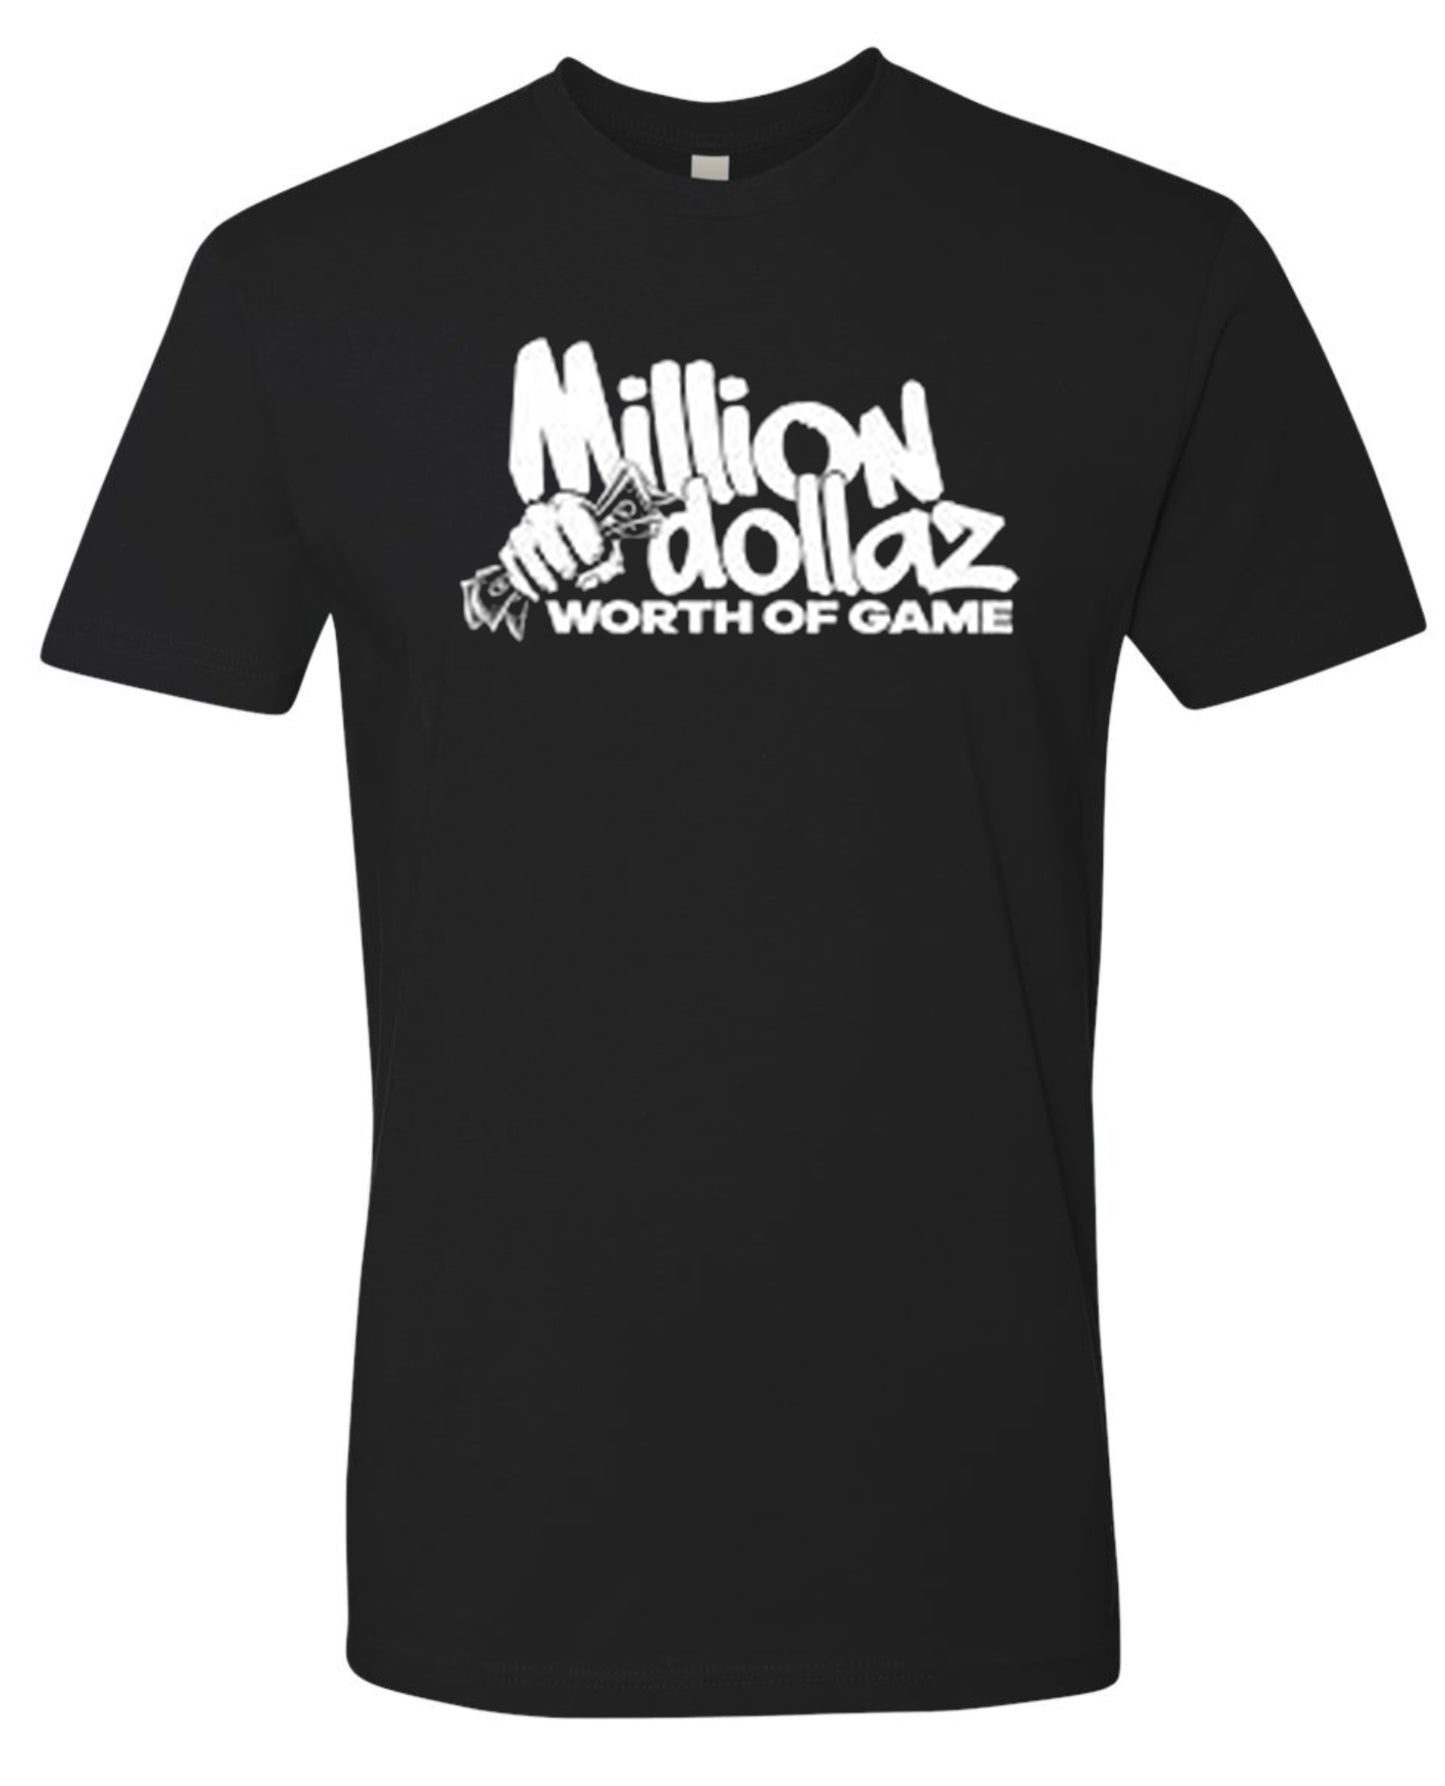 Million Dollaz Limited Edition Tee